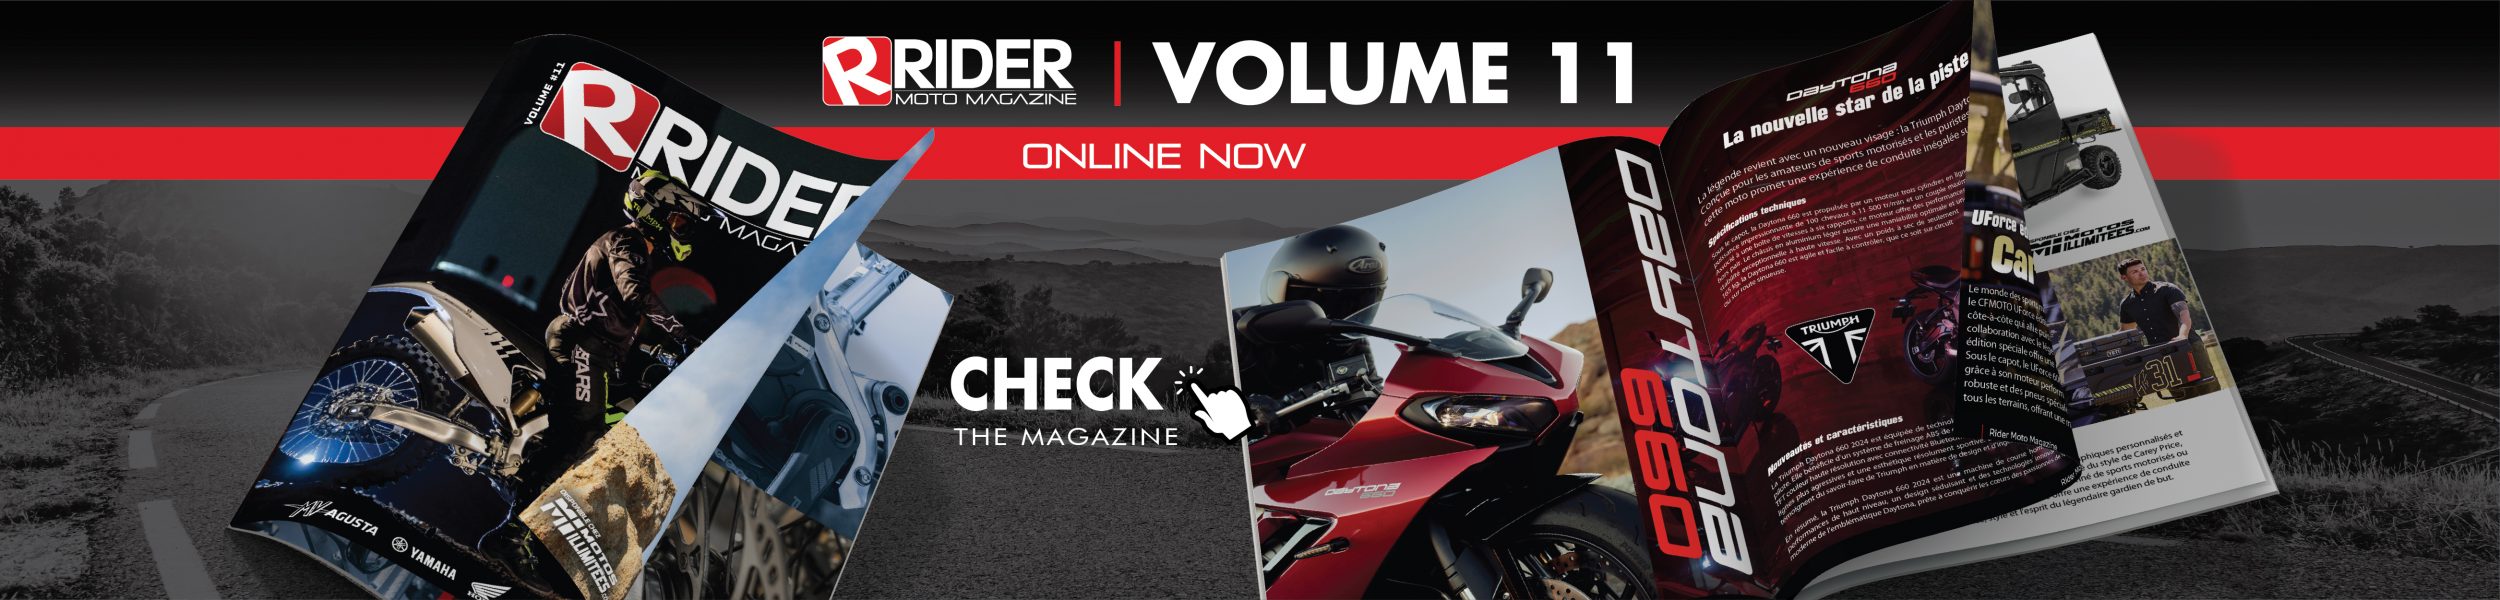 rider magazine – vol. 11